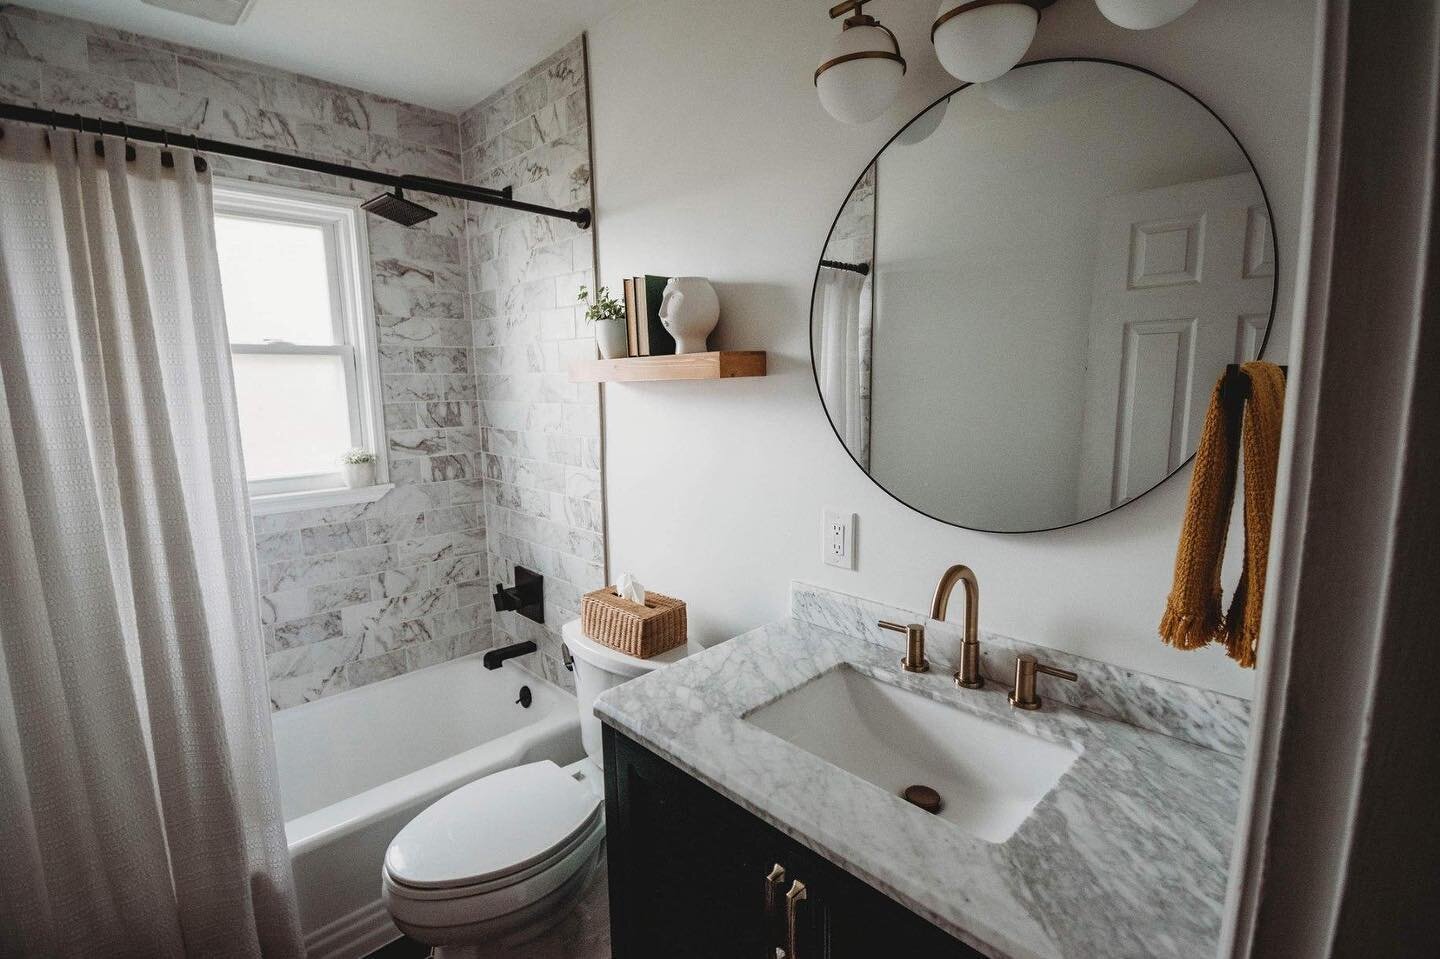 Moody bathroom. ✨
📸: @marybethbryantphotography 
.
.
.
.
.
#louisvilleinteriordesigner 
#bathroomdesign 
#bathroomremodel 
#bohostyle 
#tile 
#greendesign 
#moodygrams 
#bathroomrenovation 
#ltkhome